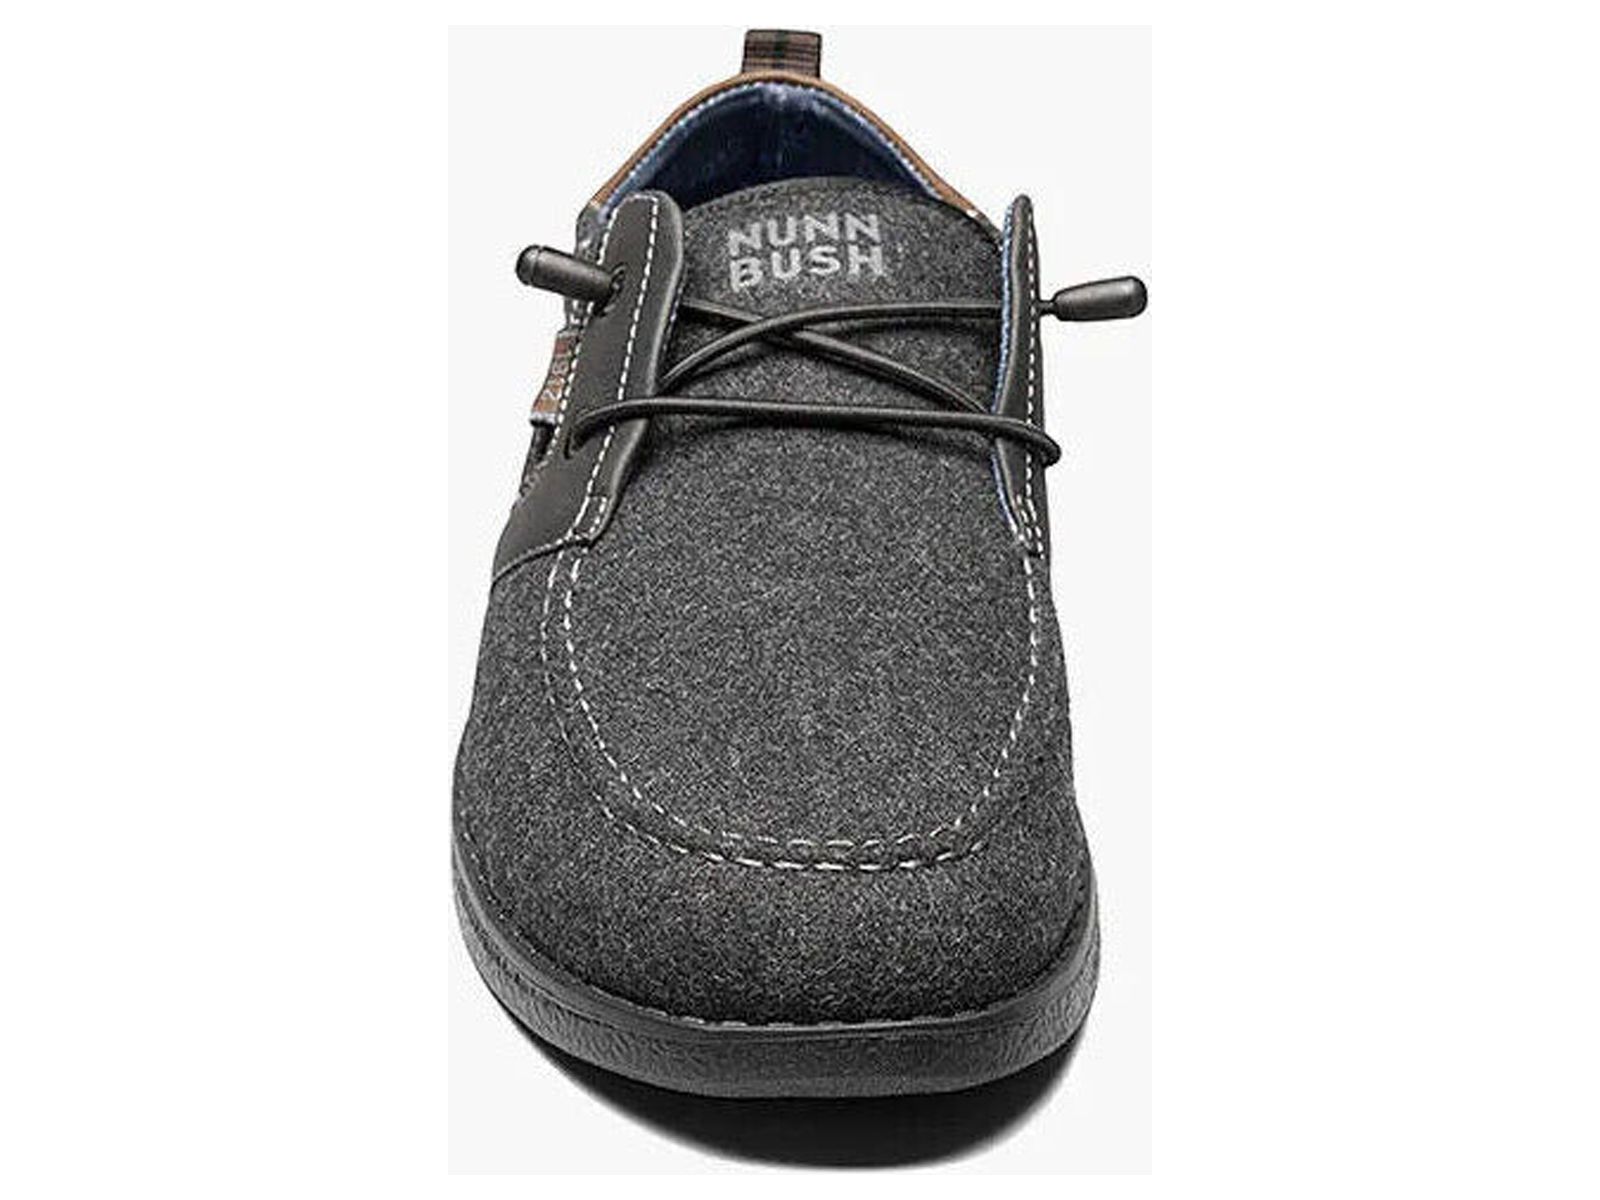 Nunn Bush Brewski Moc Toe Wallabee Shoe Casual Charcoal 84902-013 - image 3 of 8